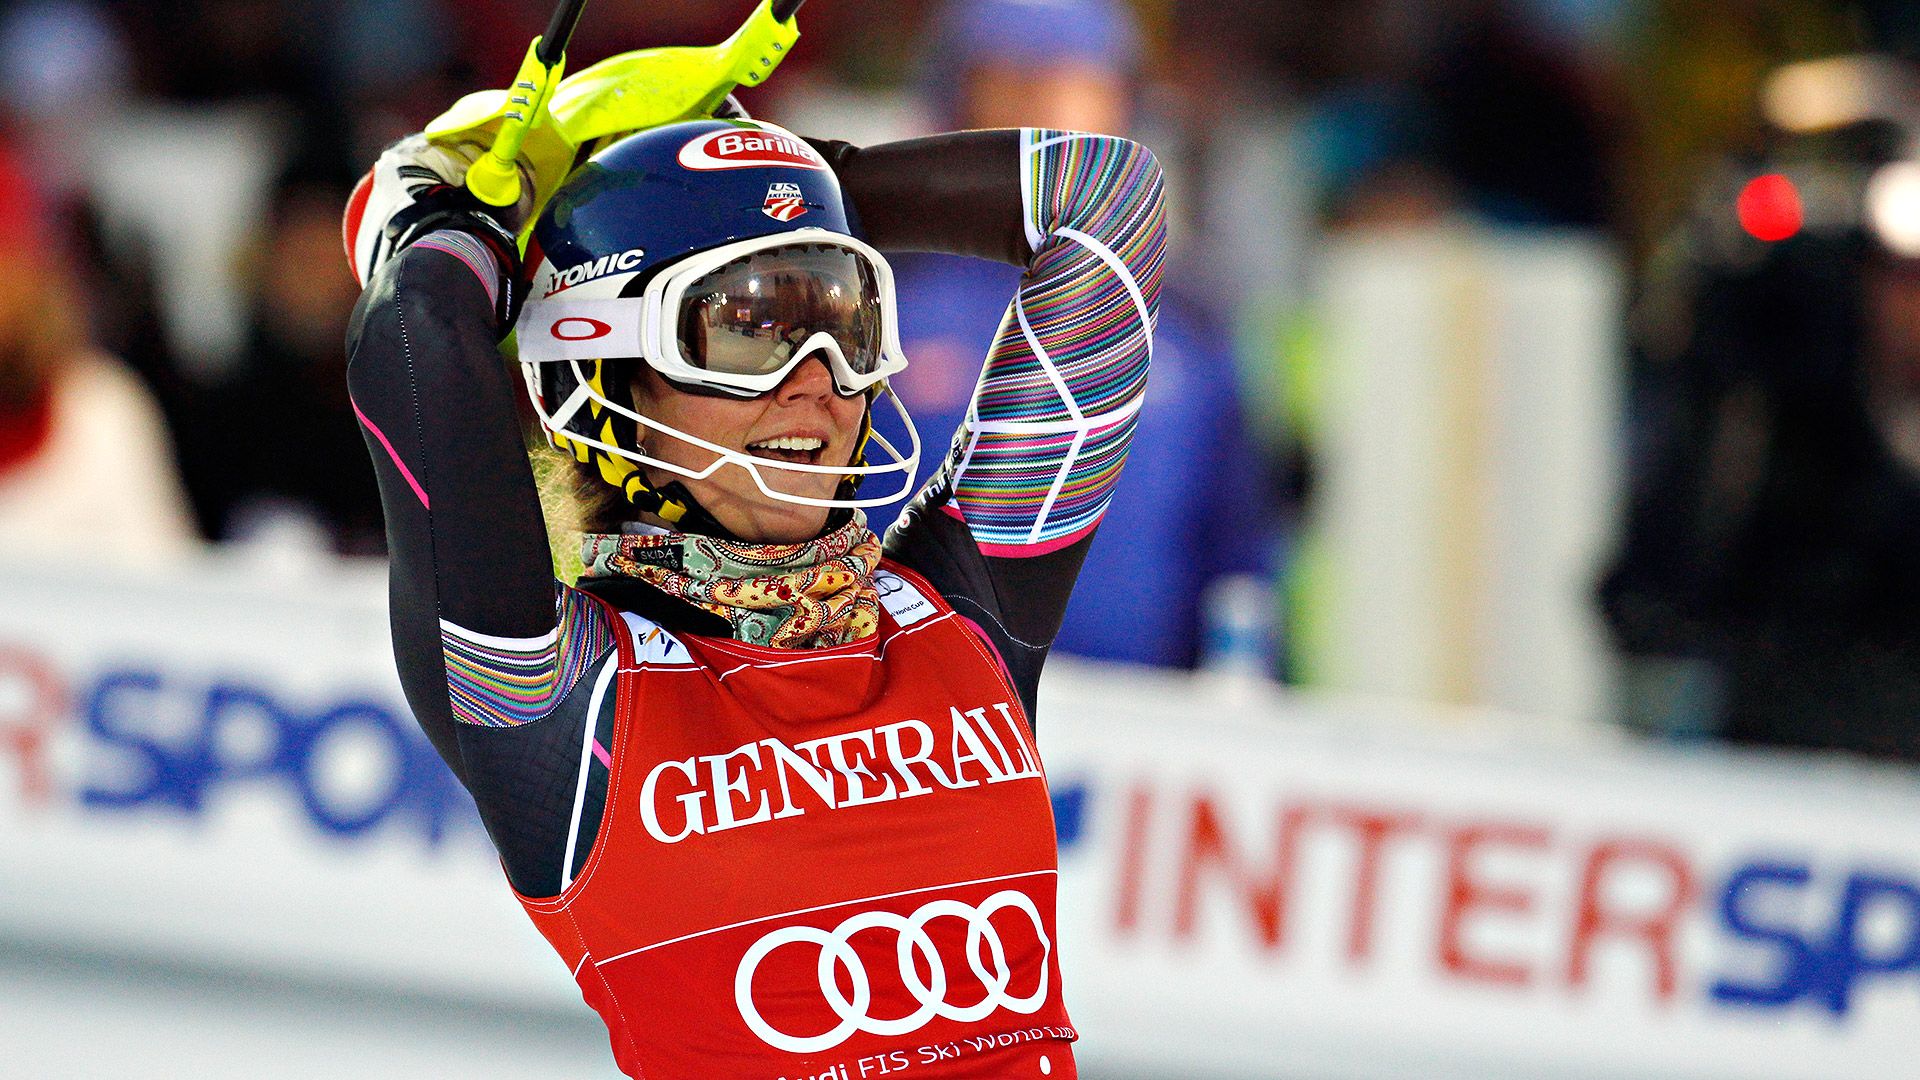 American Mikaela Shiffrin, 18, claims World Cup slalom opener - ESPN